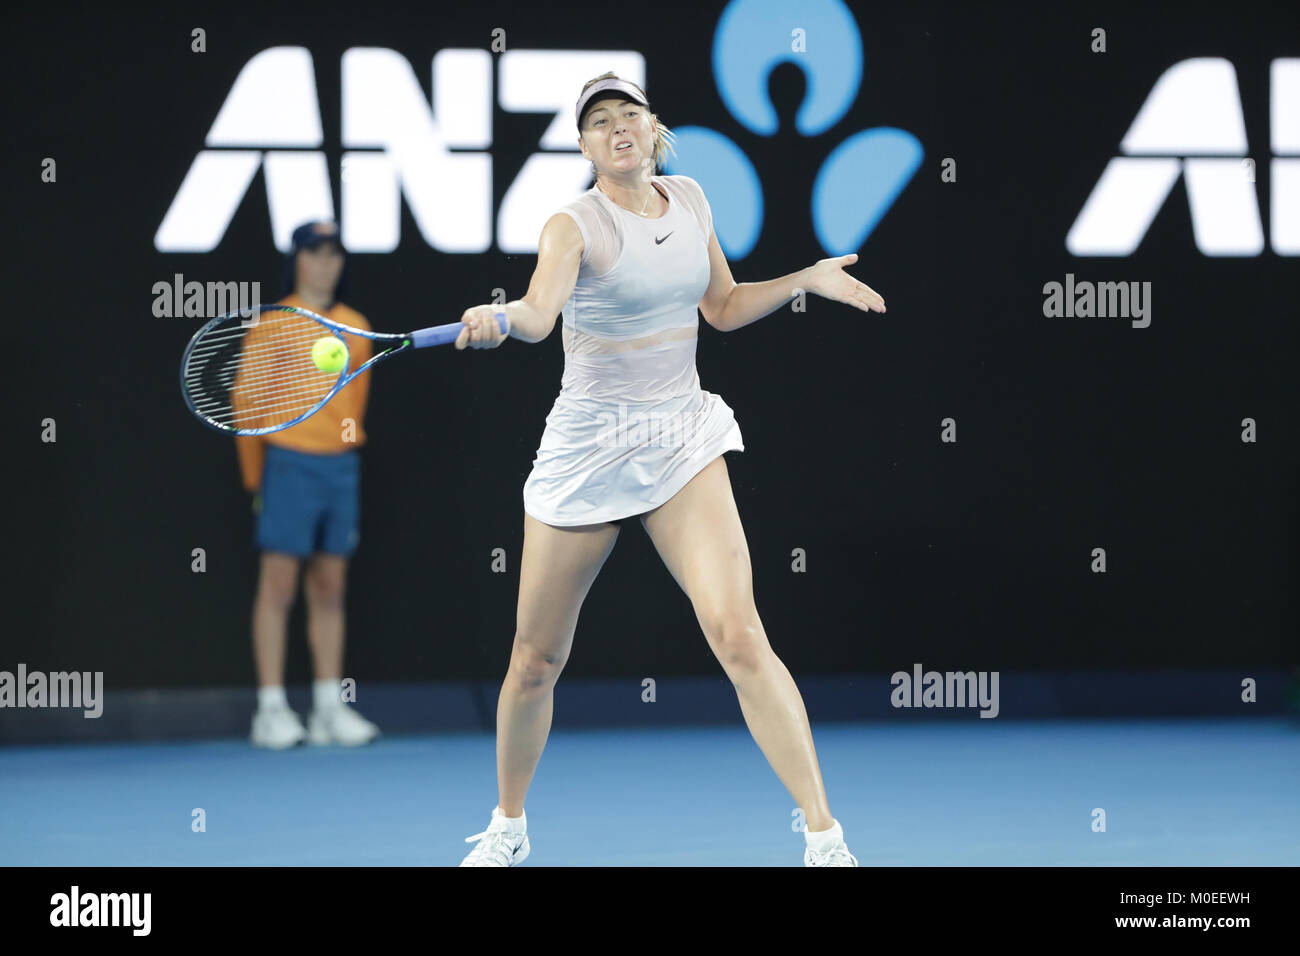 5:09 / 24:22serena Williams v Maria Sharapova - Australian open 2015 Final | ao Classics.